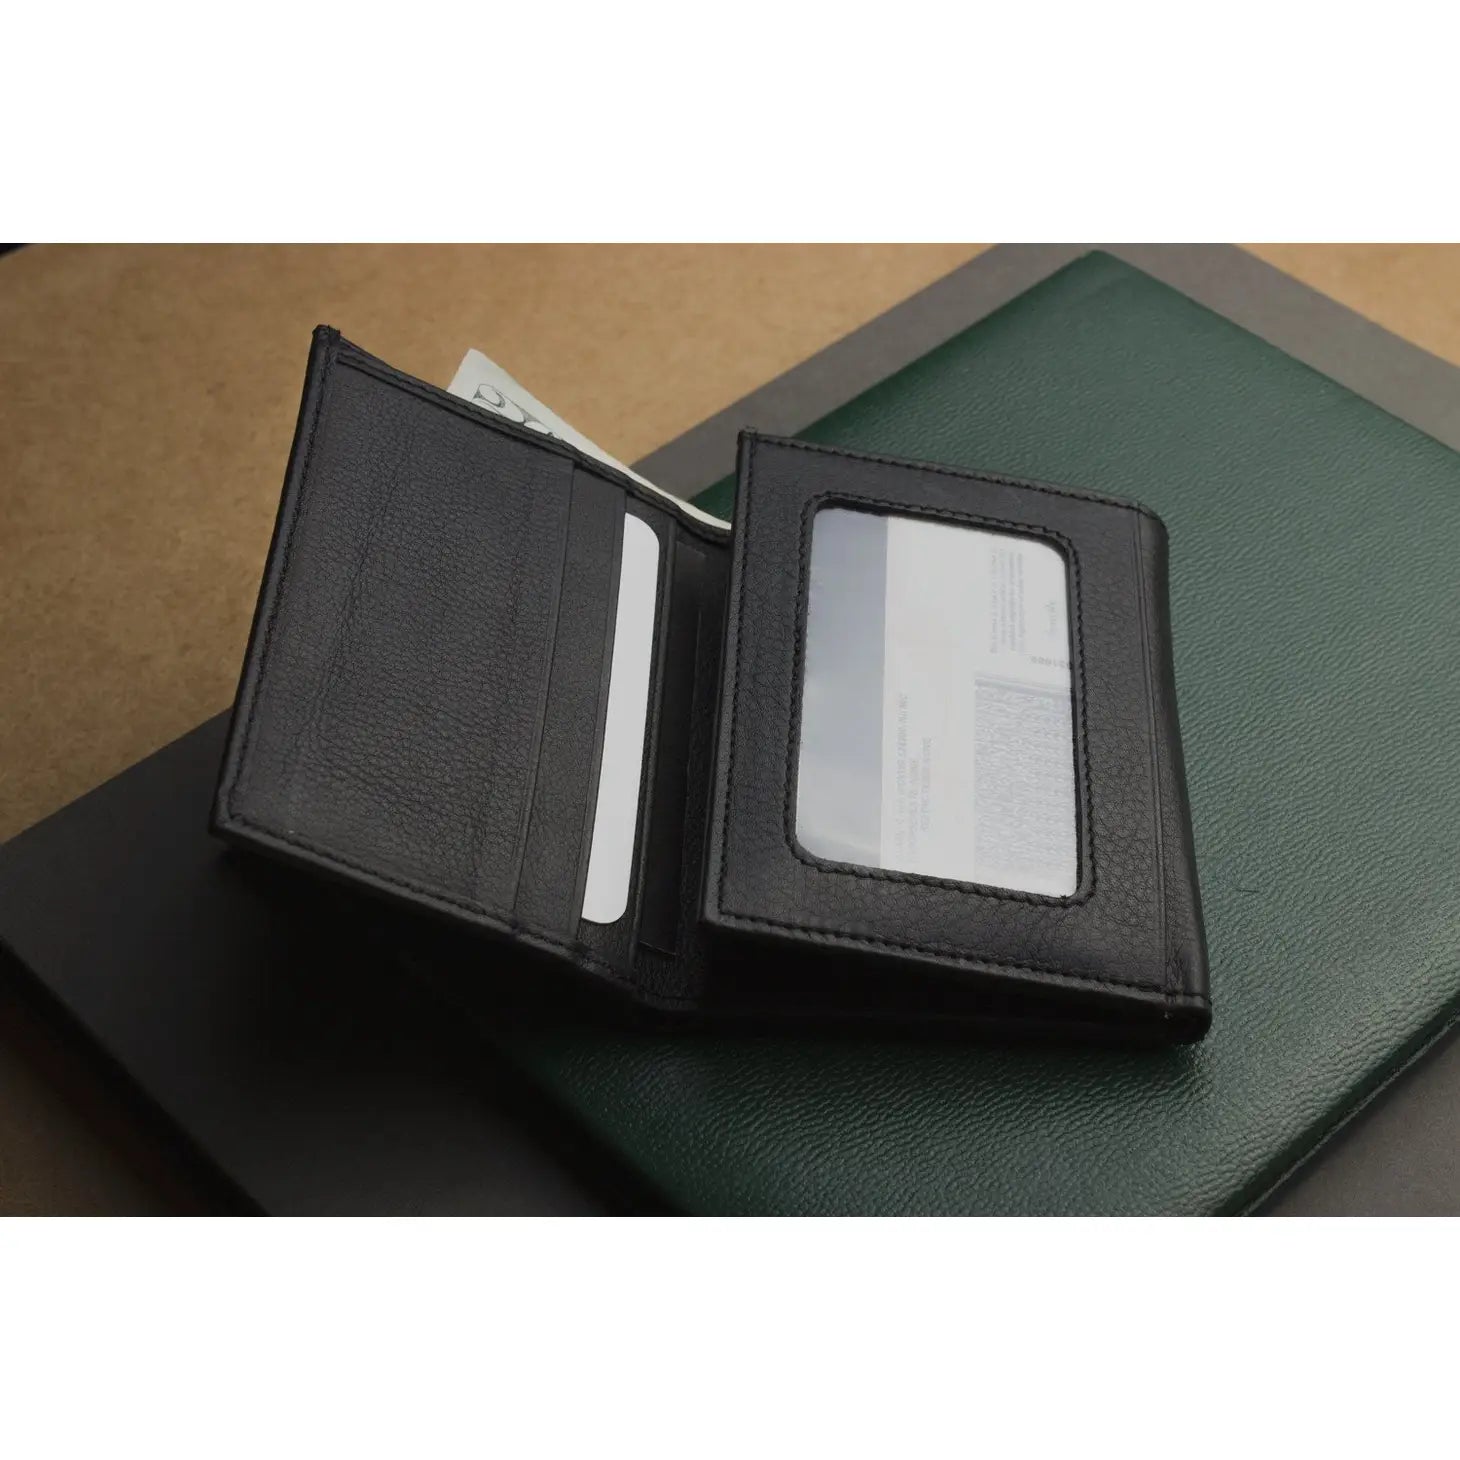 Kiko Leather Black Trifold Wallet #125